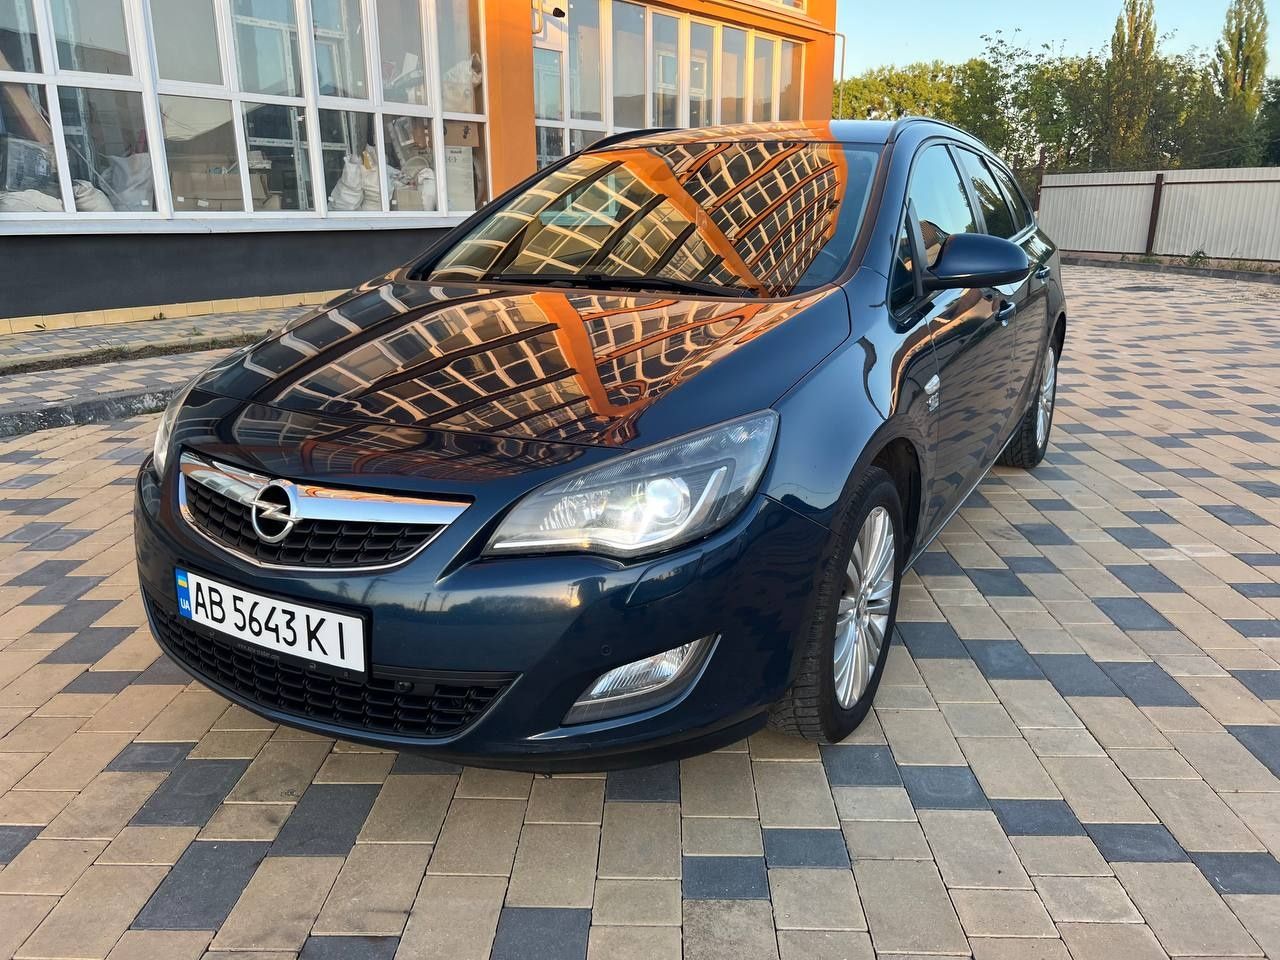 Opel Astra J Sport, 2011р. 2.0 дизель, 160 к. с.